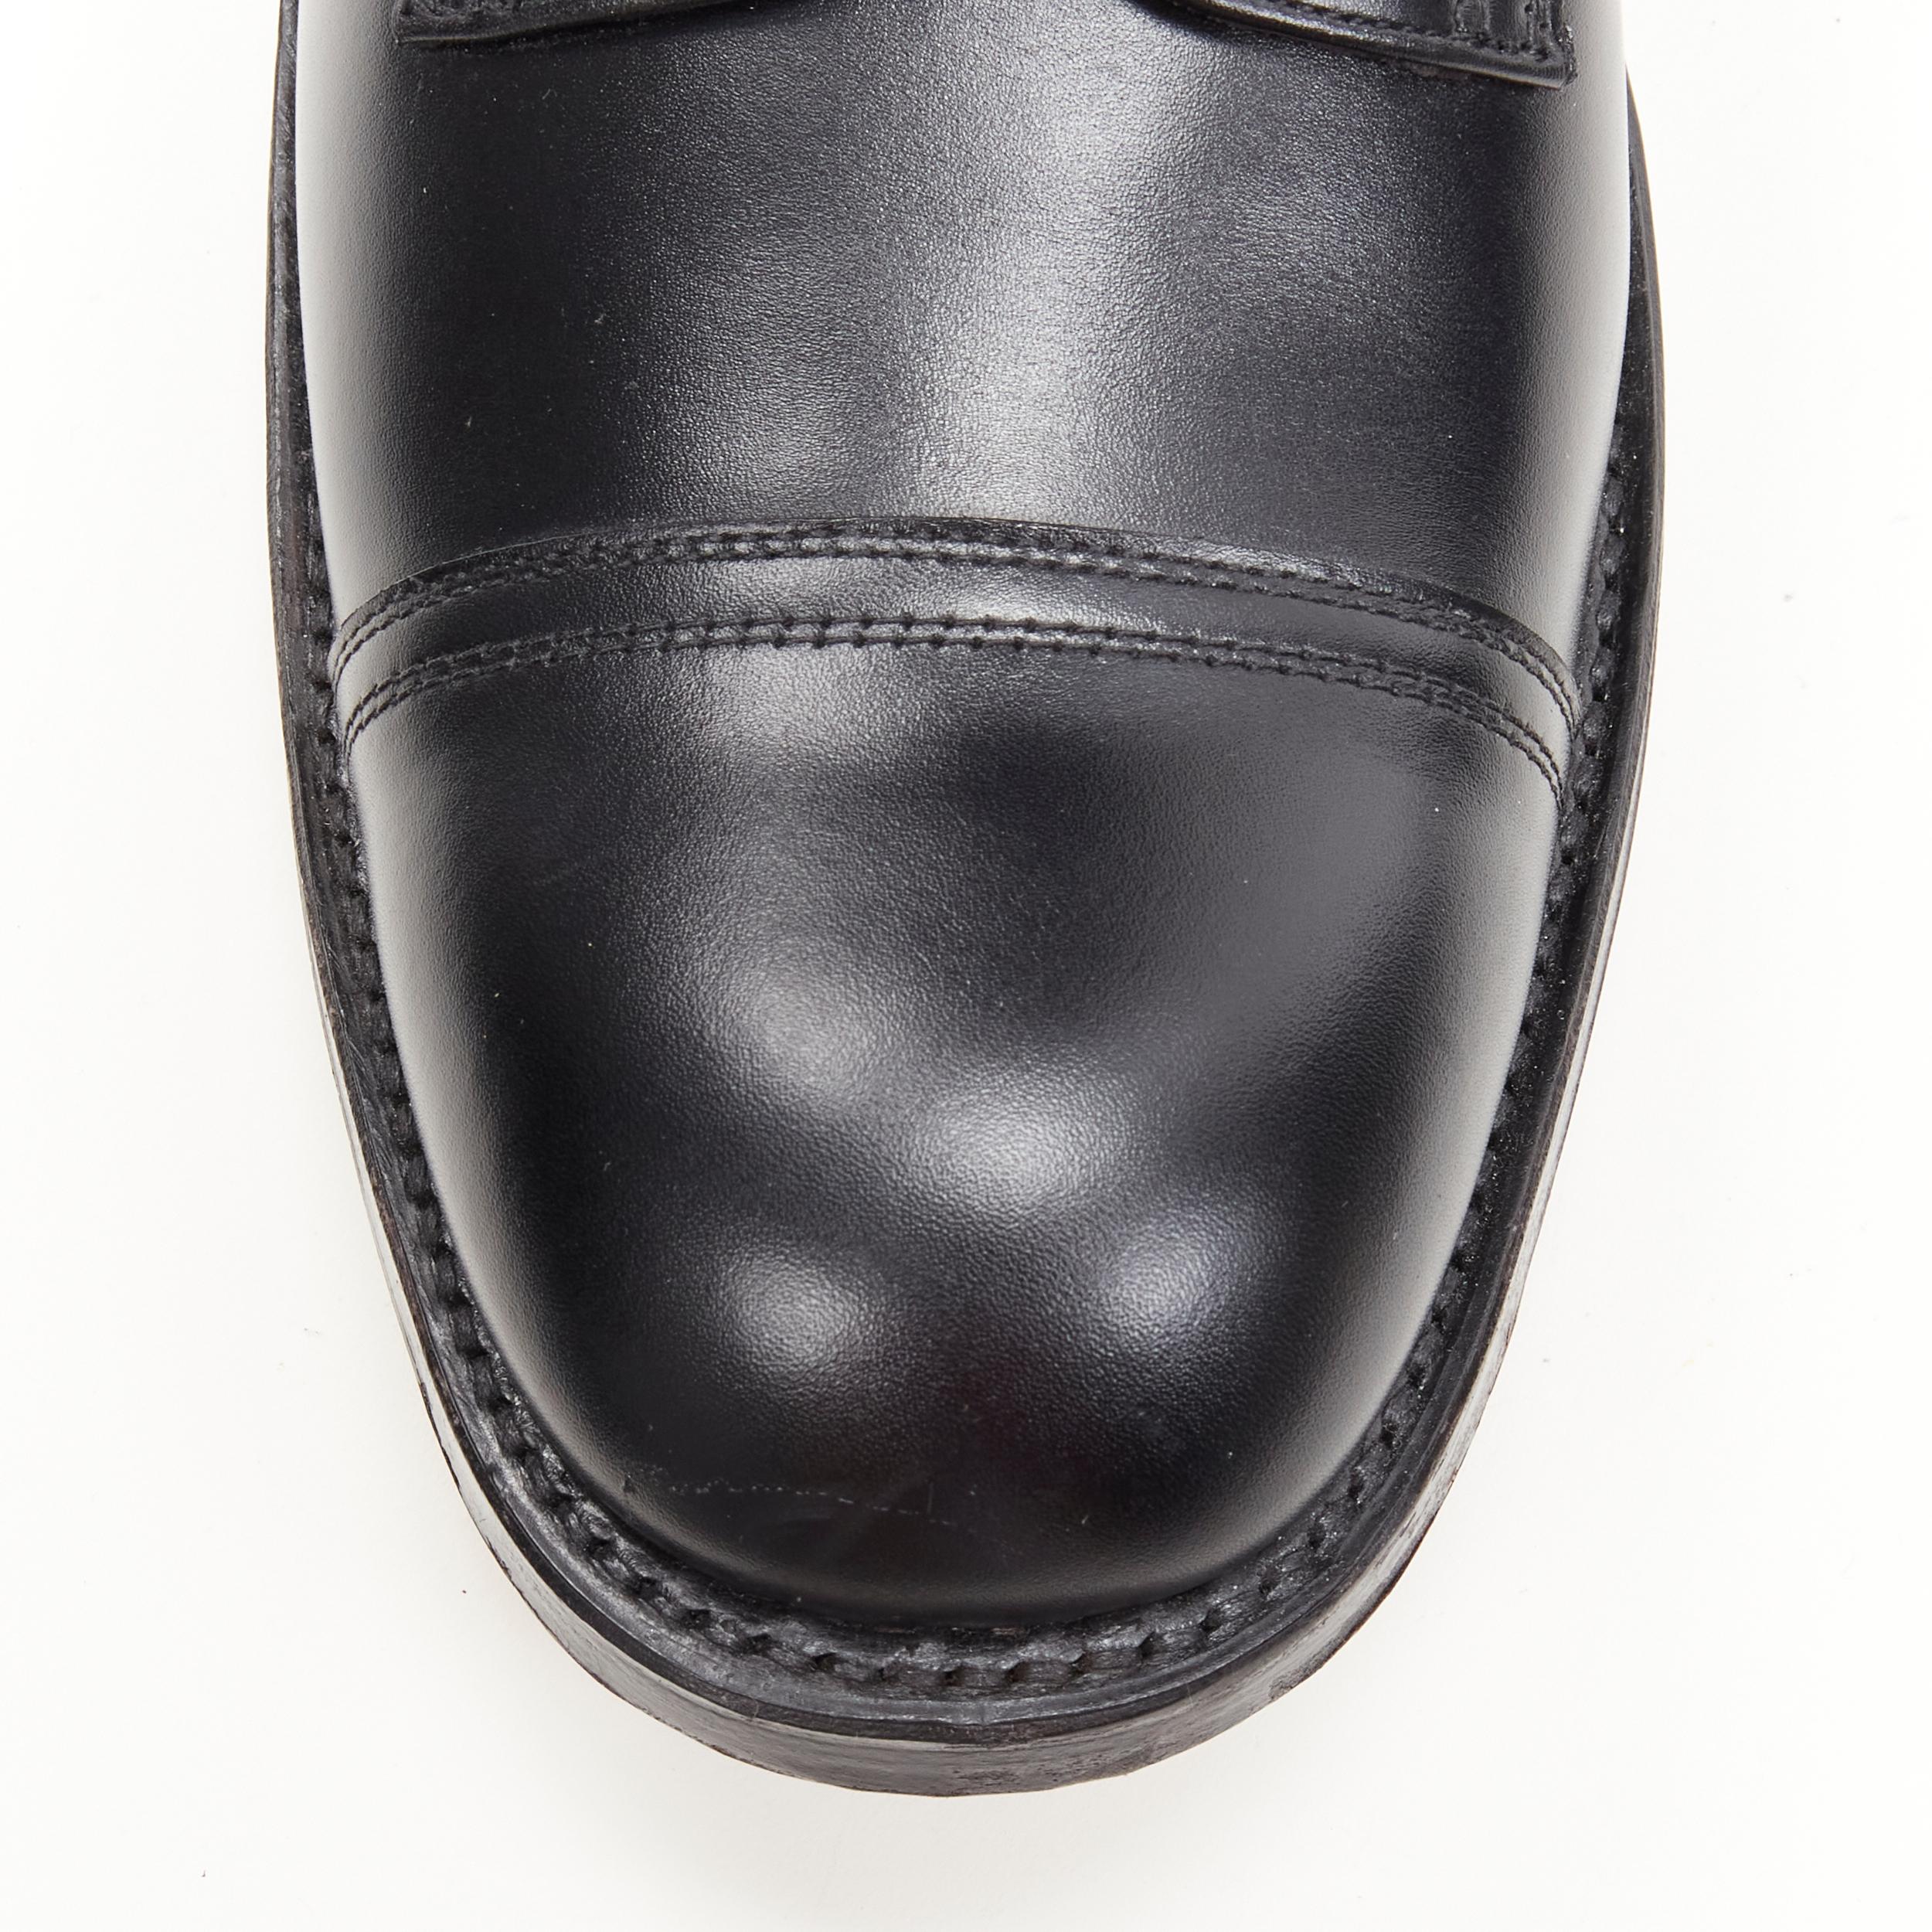 Black new PAUL HARNDEN SHOEMAKERS black calf leather Welted Derby shoe UK7 EU41